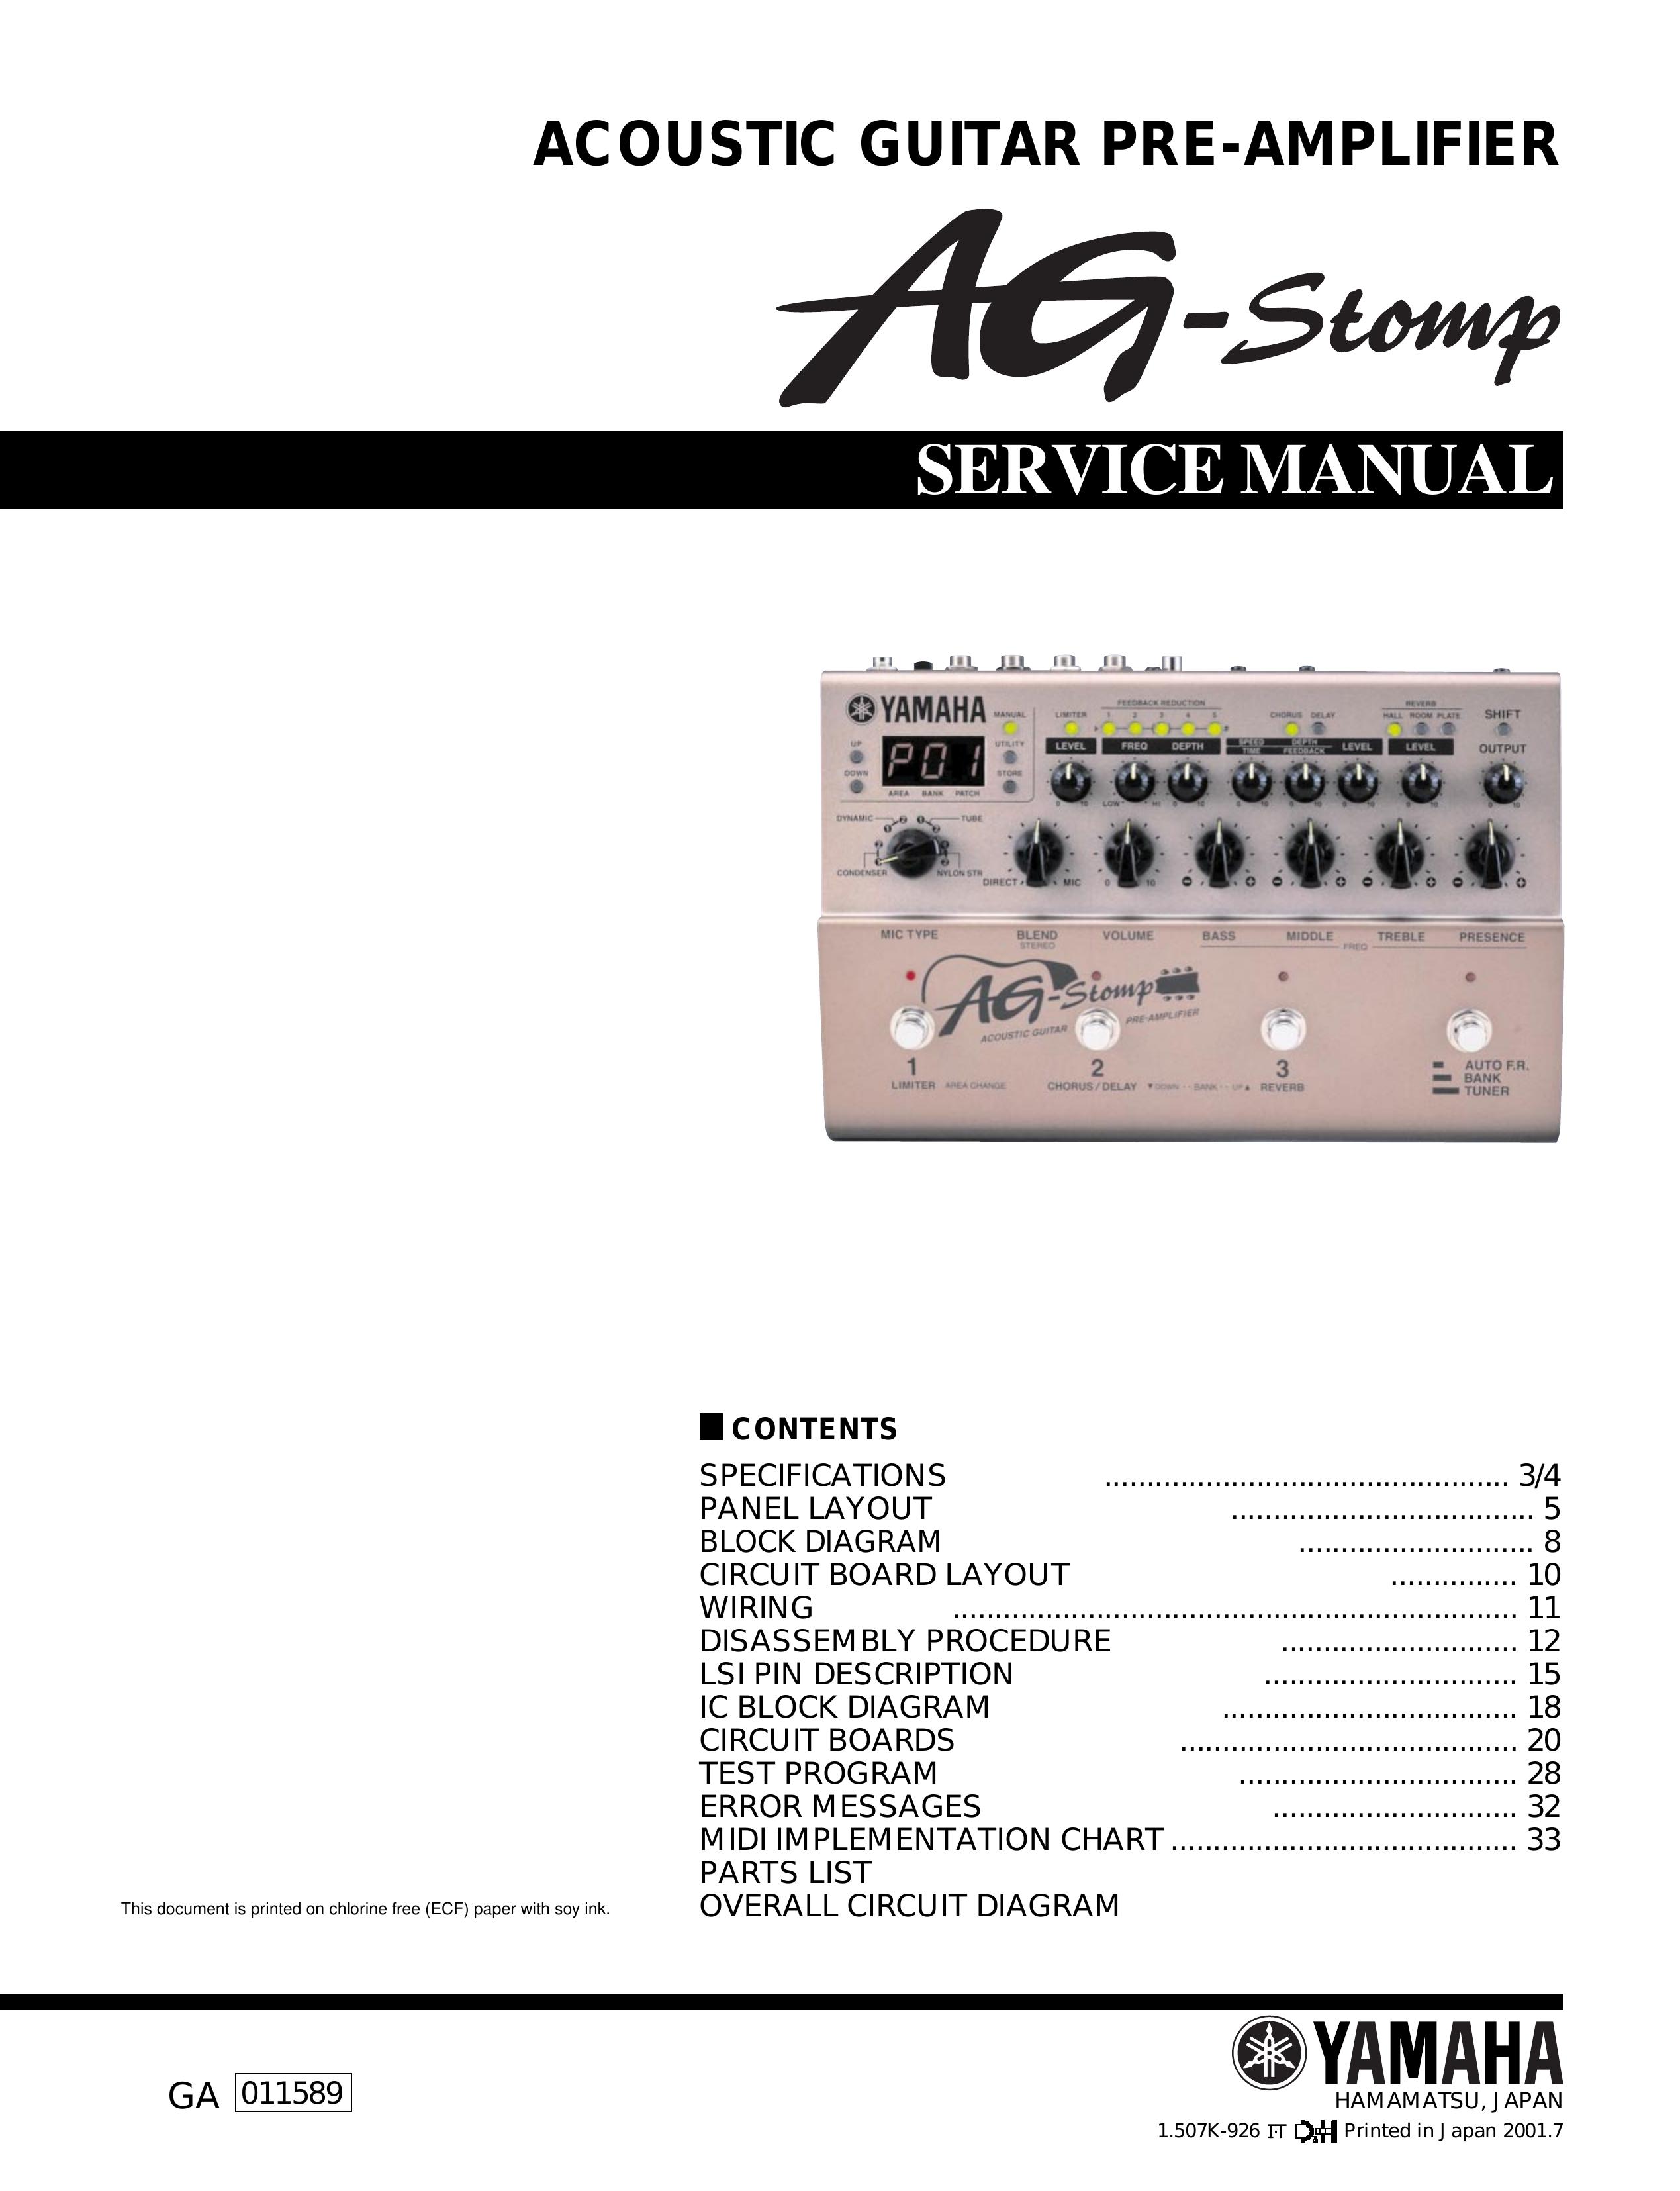 Yamaha GA 011589 Musical Instrument Amplifier User Manual